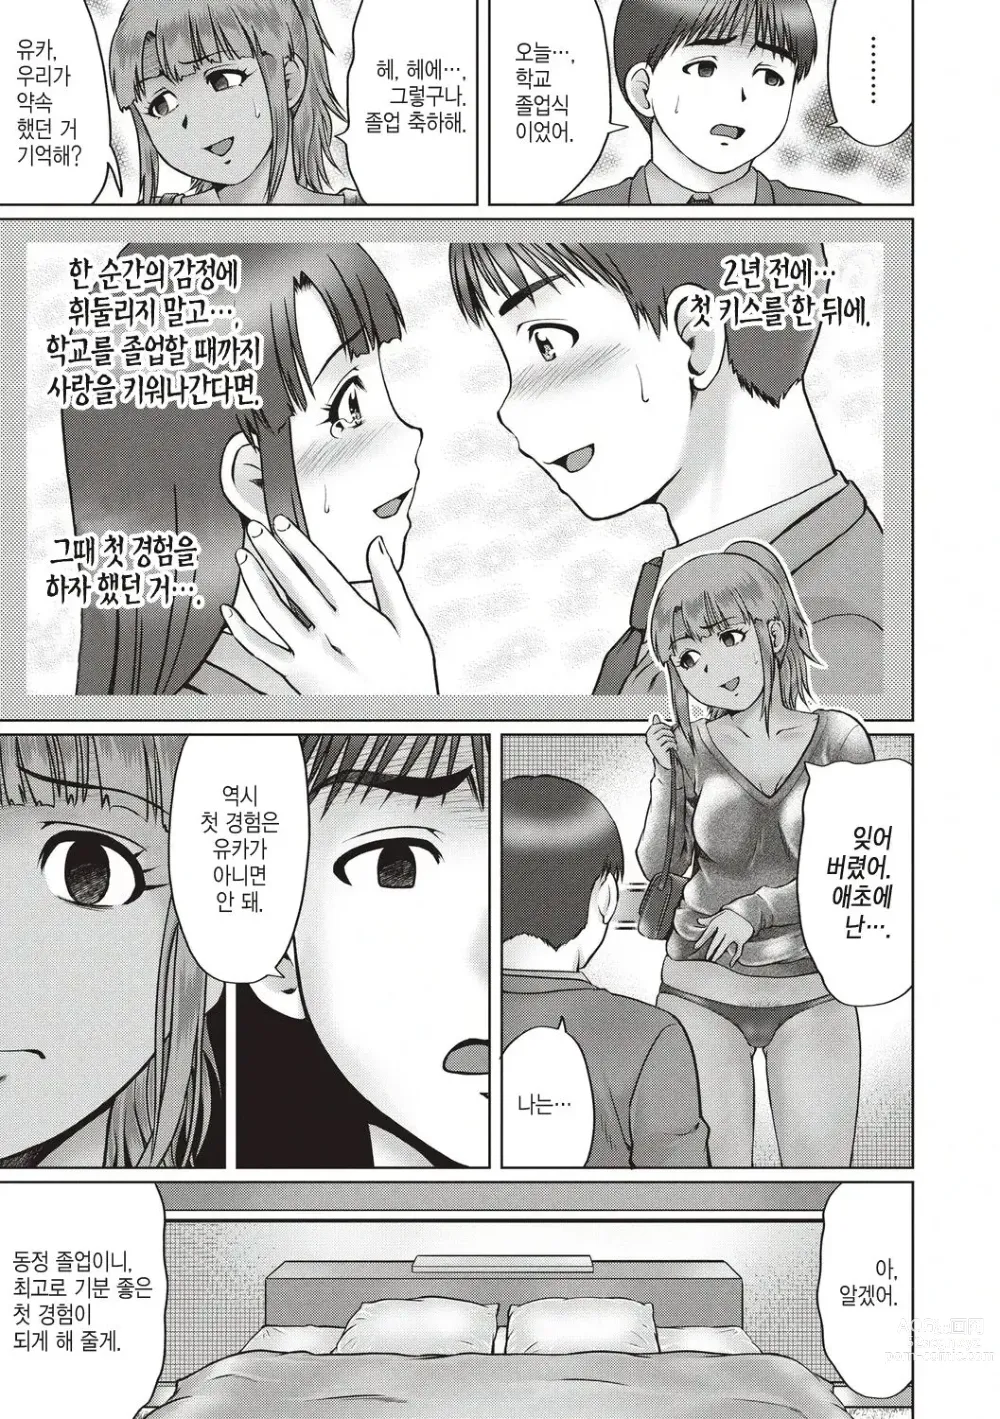 Page 5 of manga 기나긴 밤... -후편-